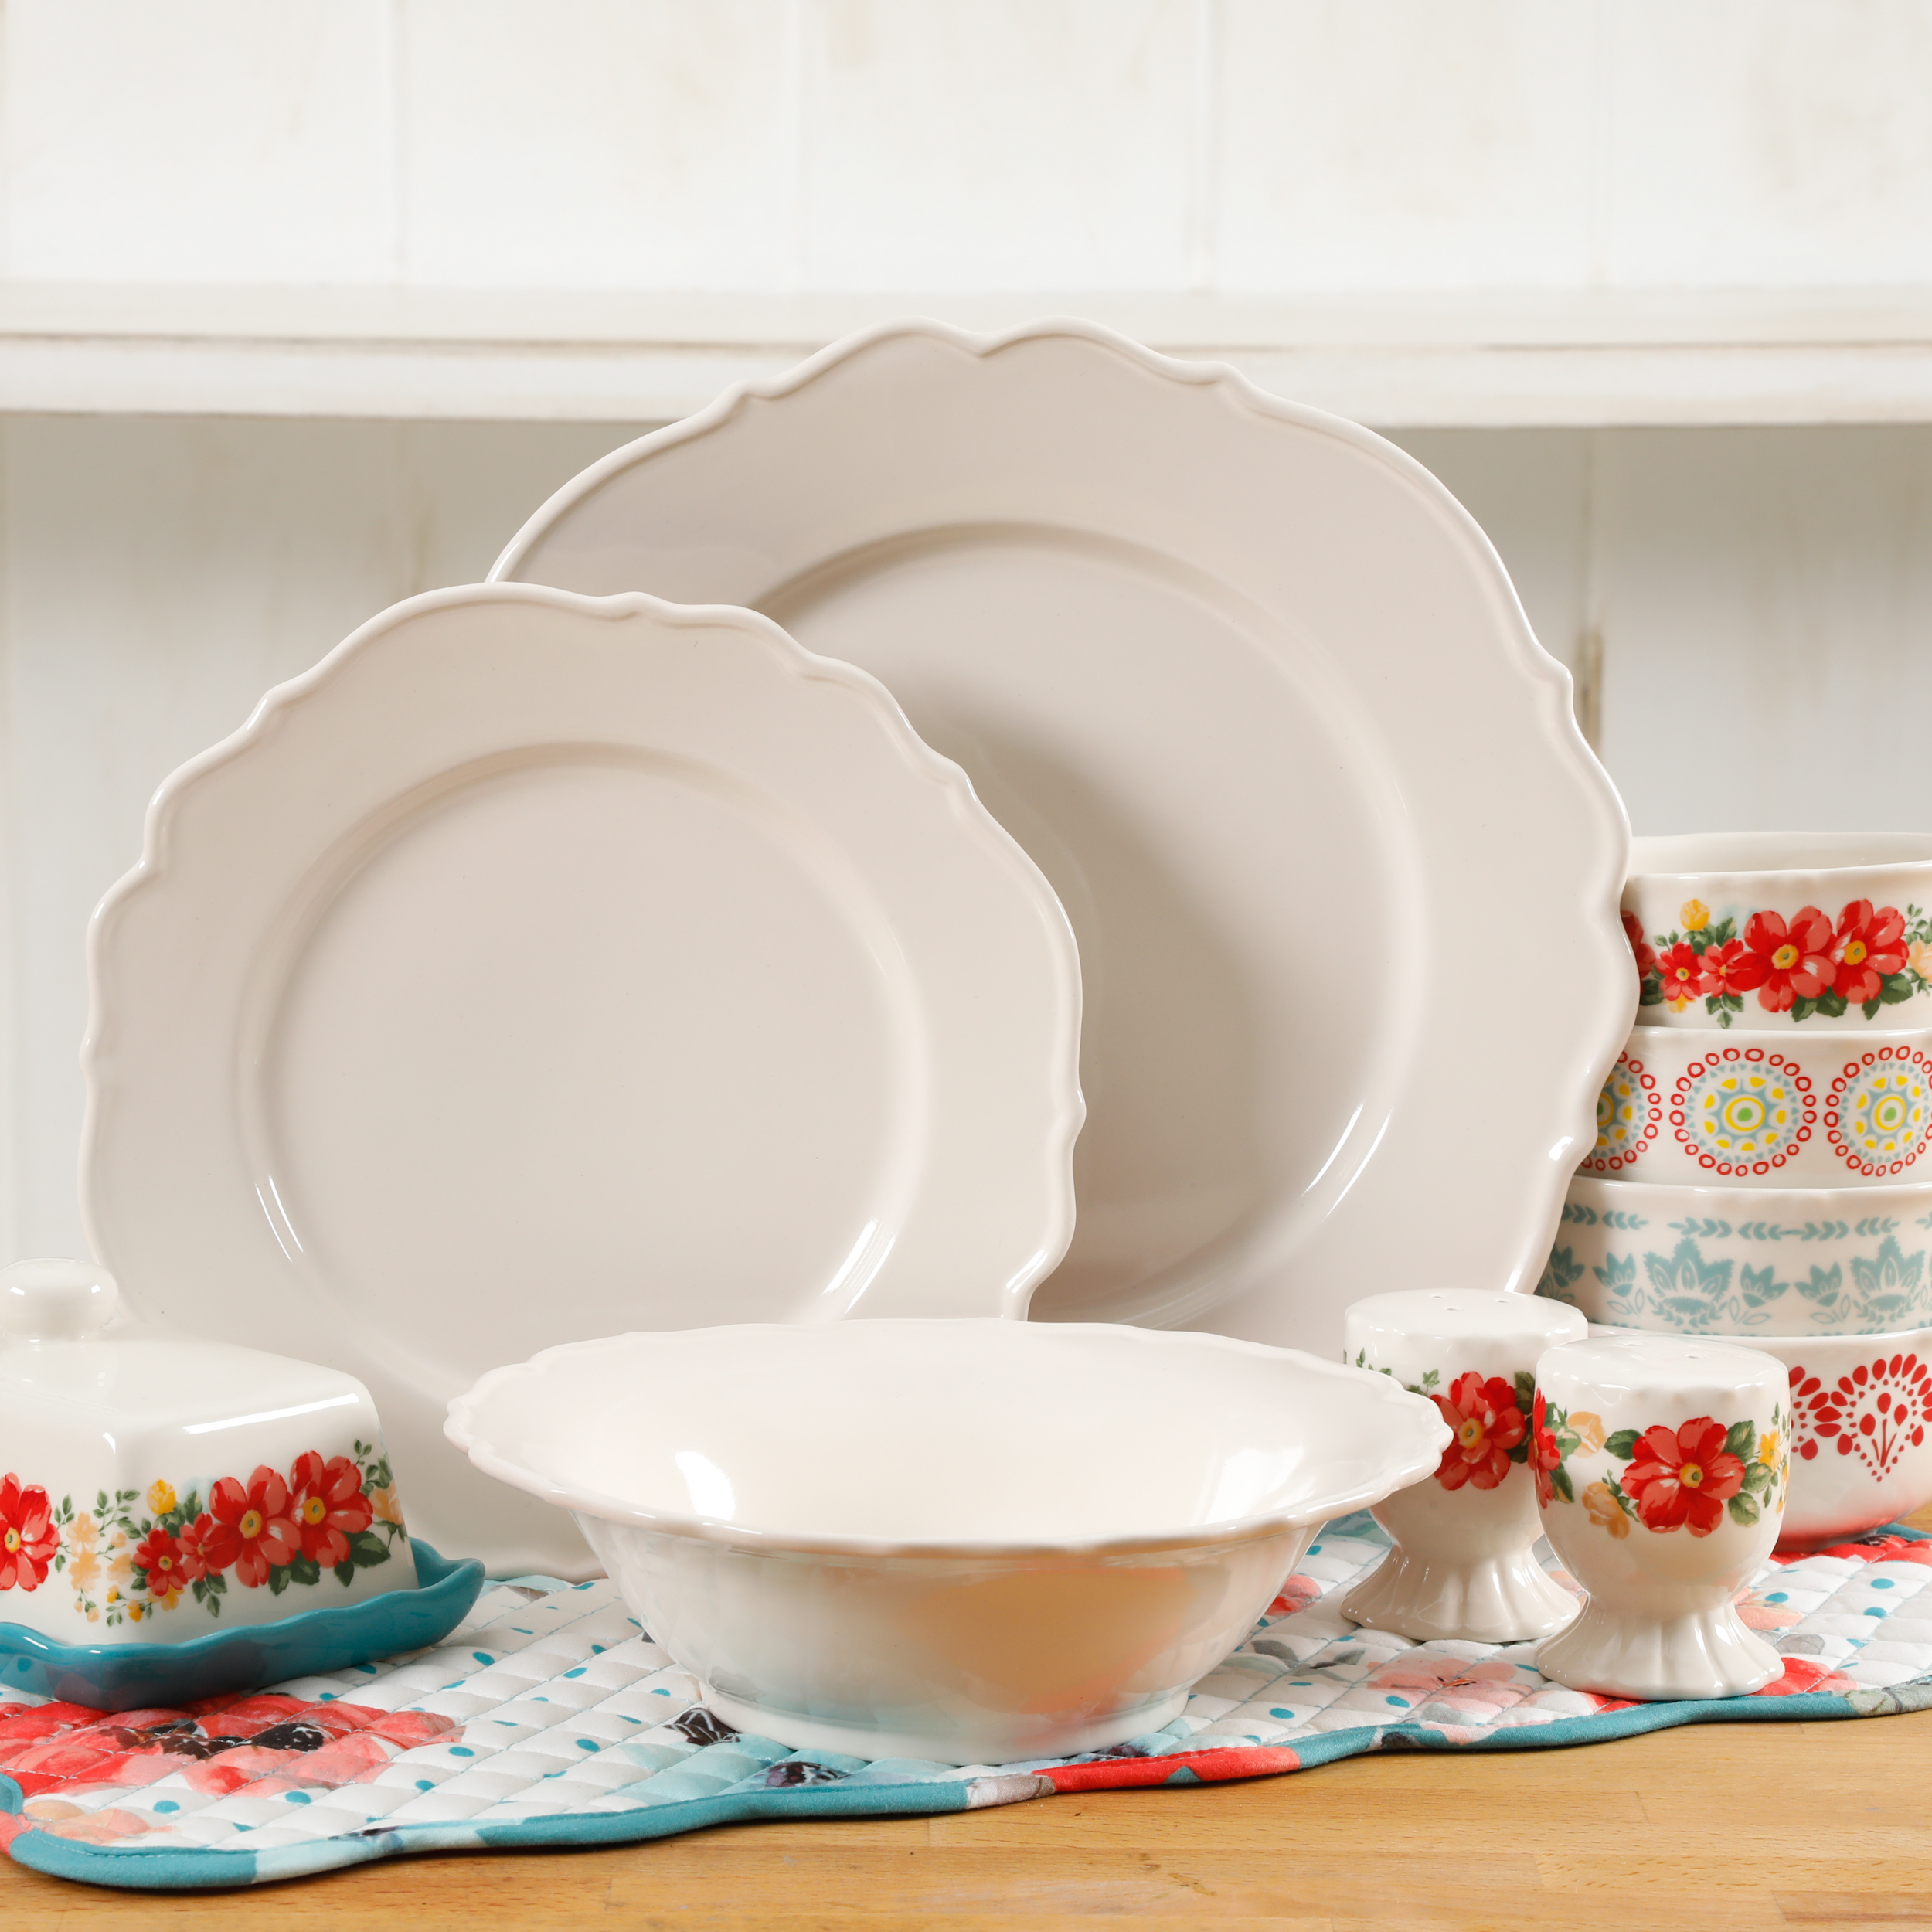 The Pioneer Woman Vintage Ruffle Dinnerware Set, Linen, 20pc - image 1 of 12